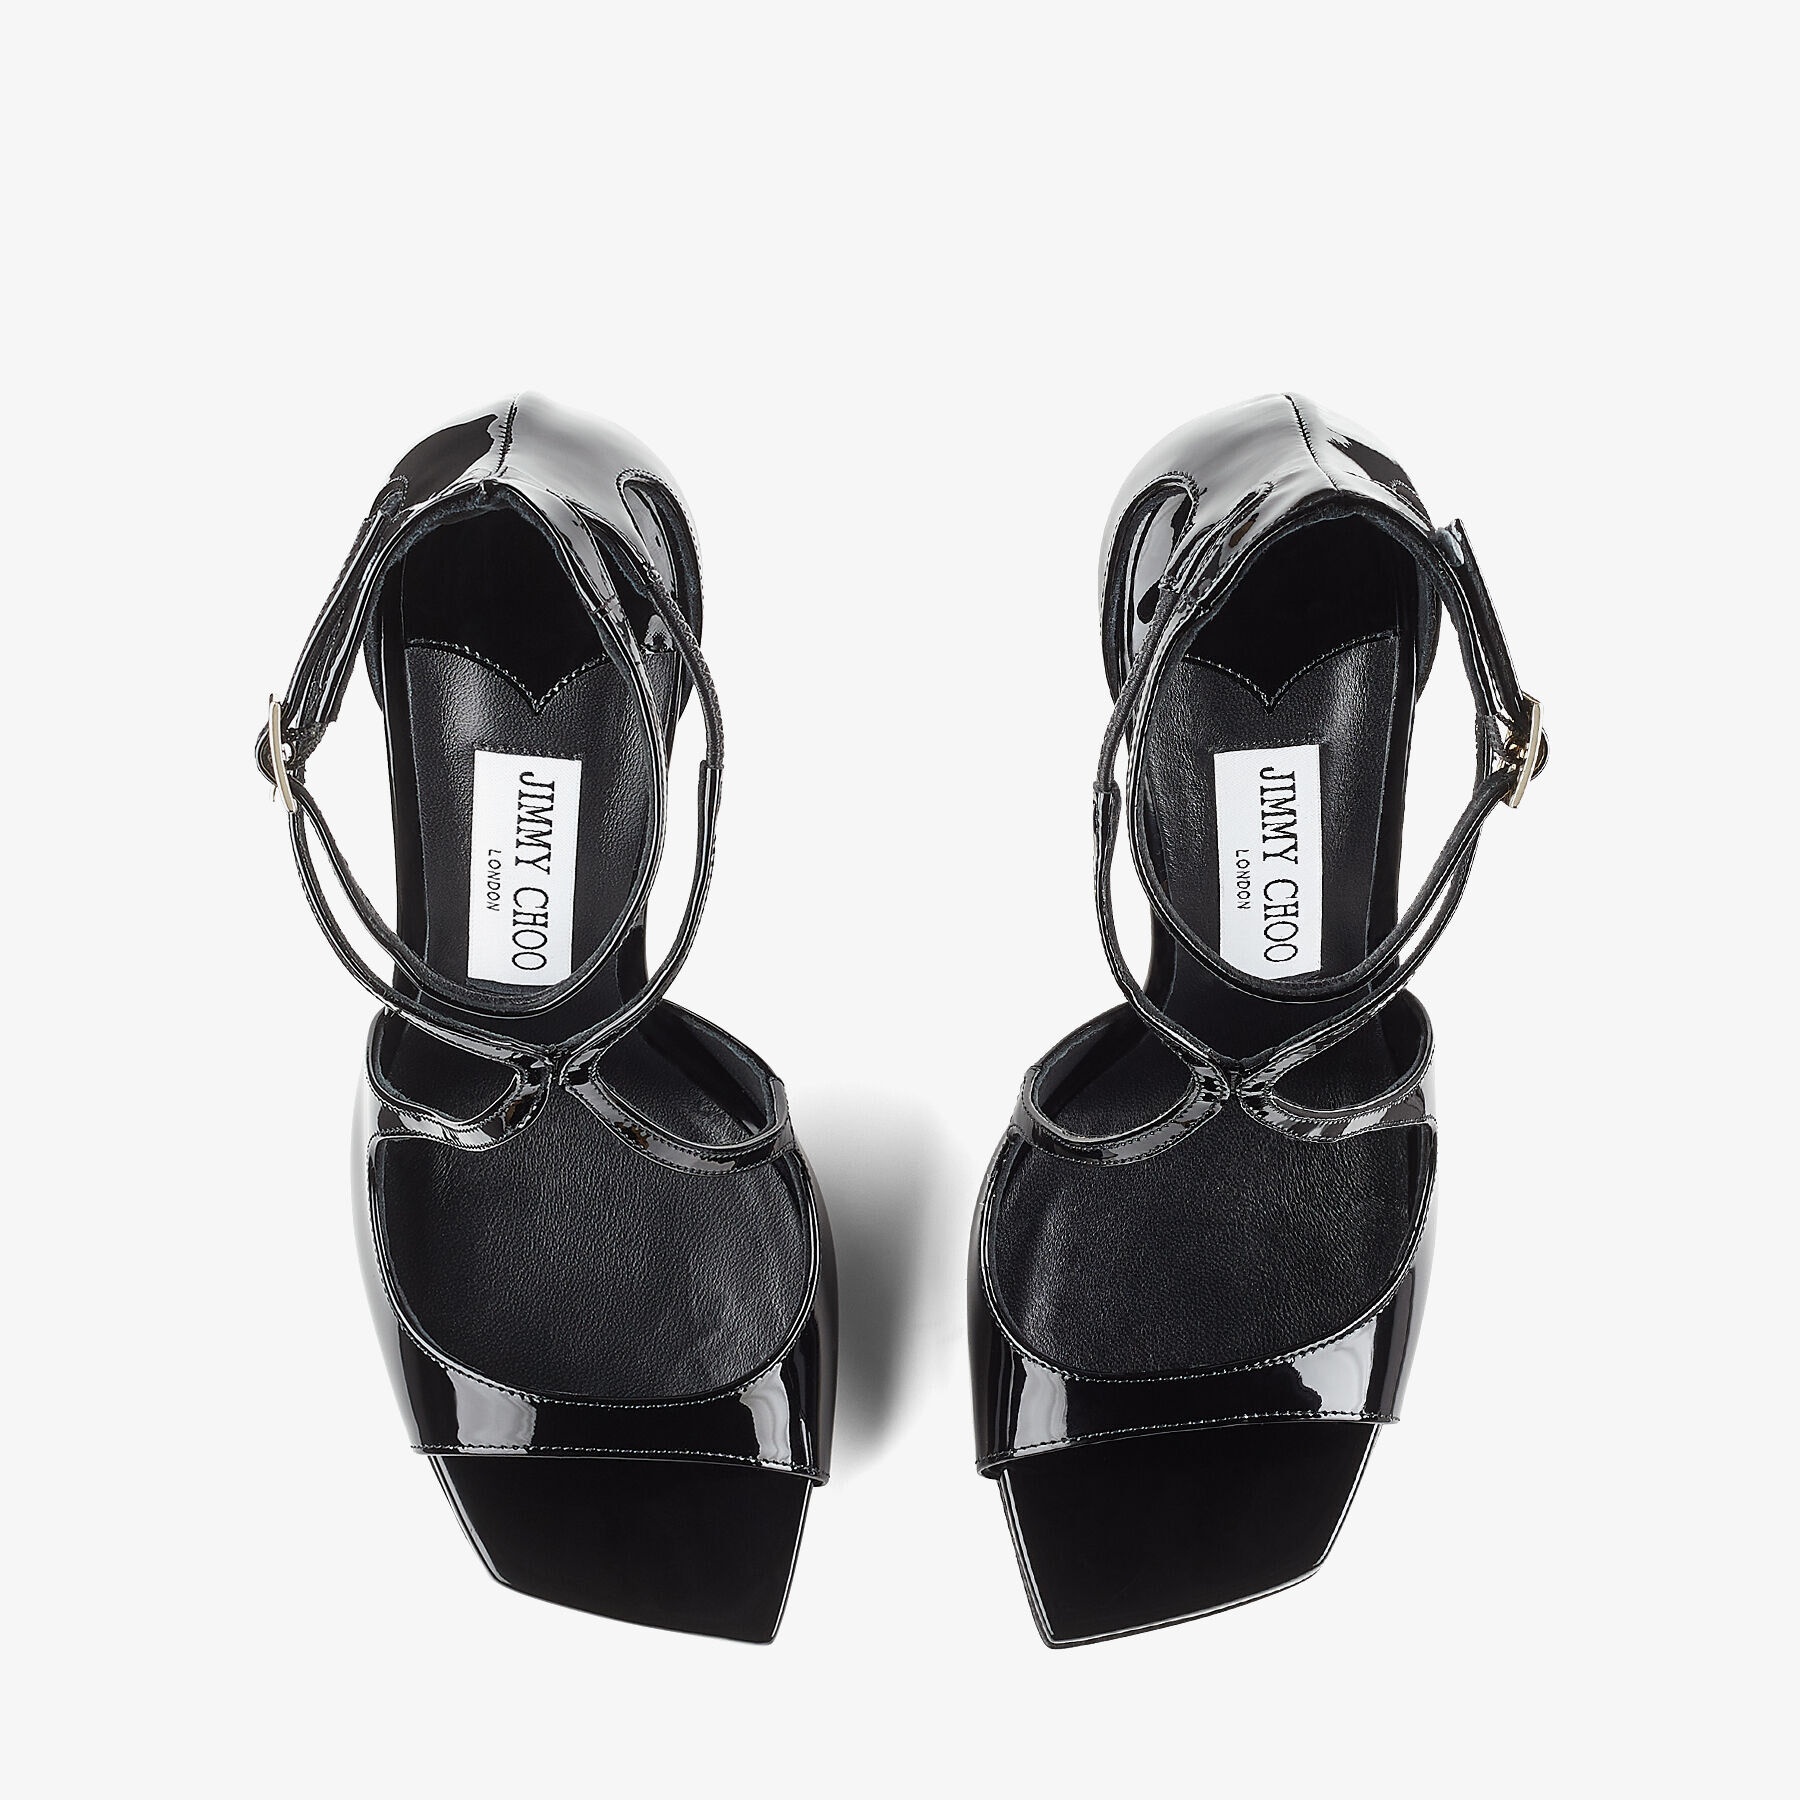 Azia 110
Black Patent Leather Sandals - 5